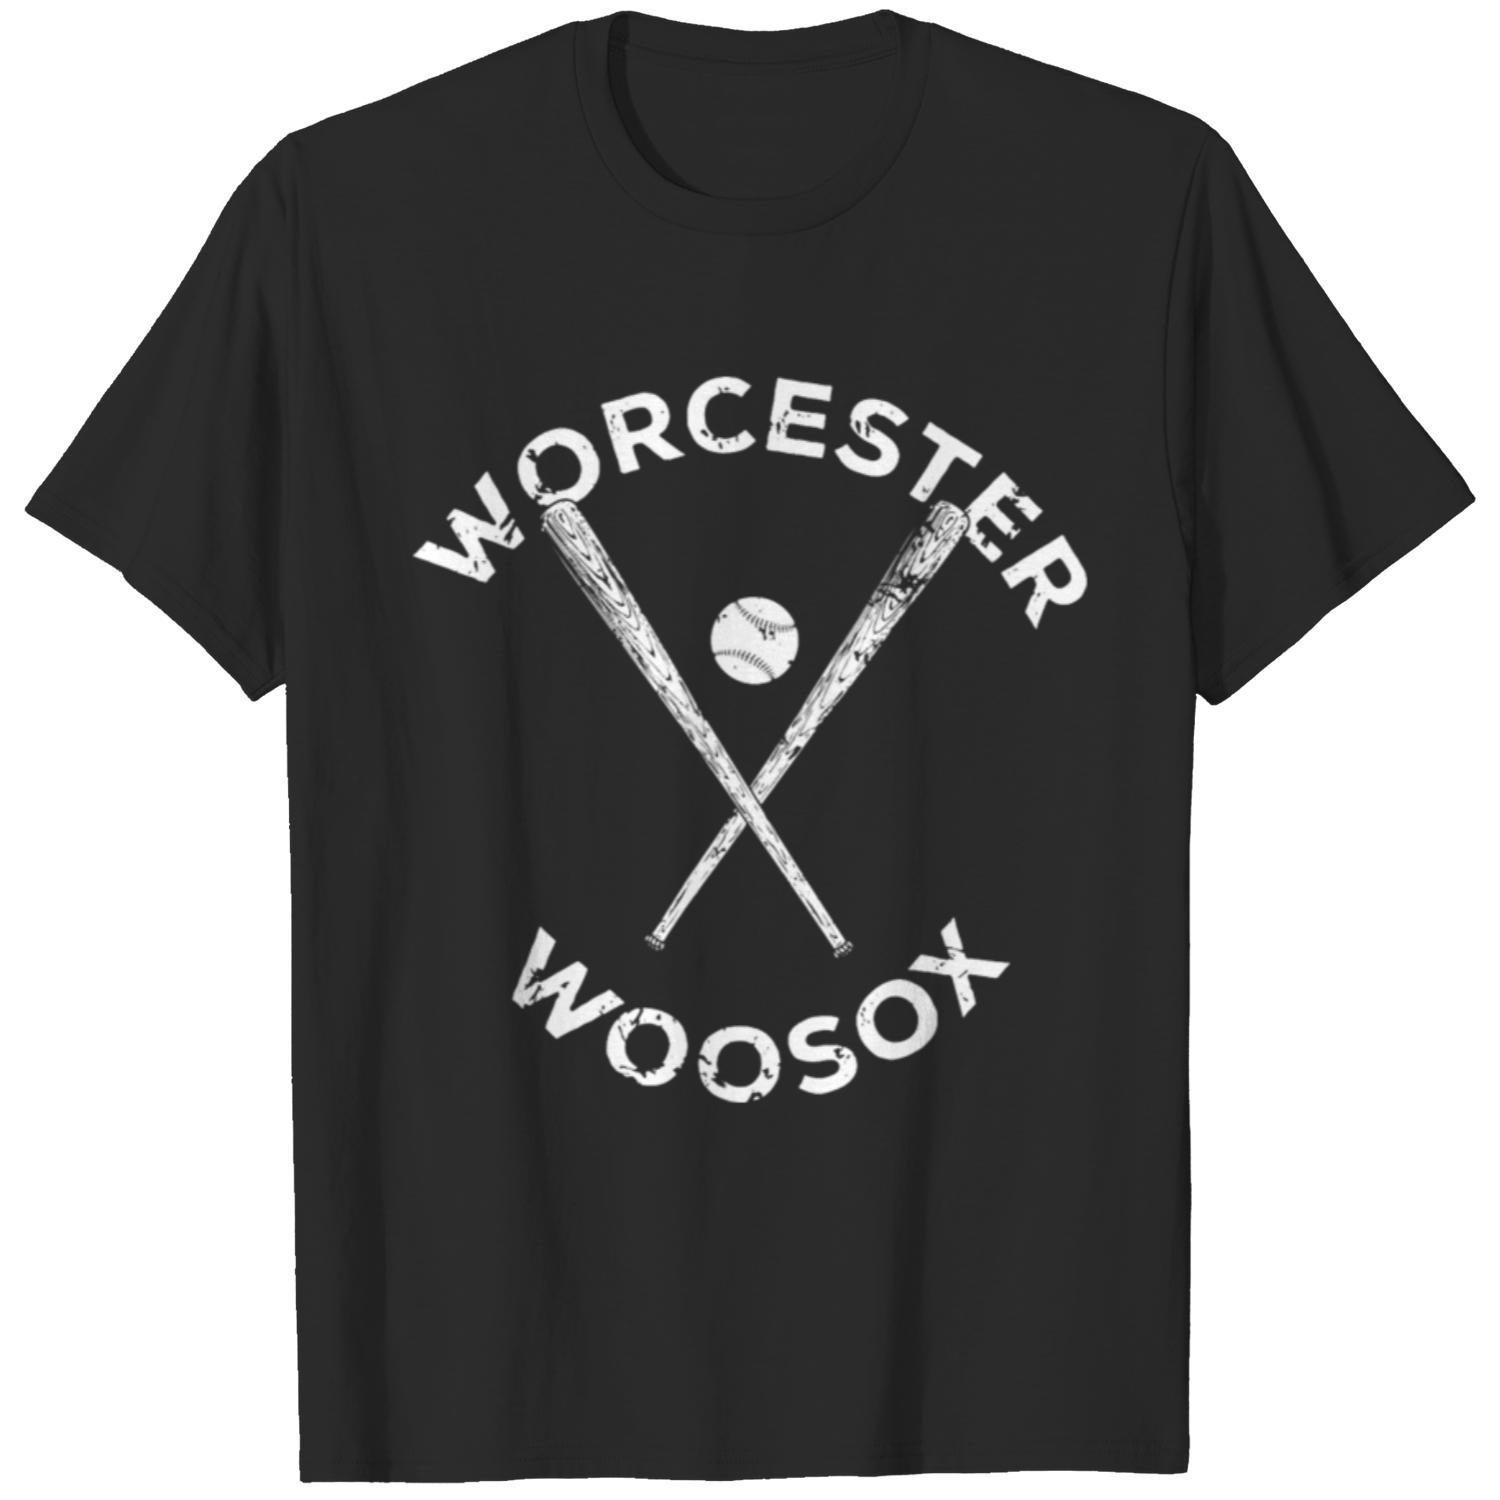 woosox shirt